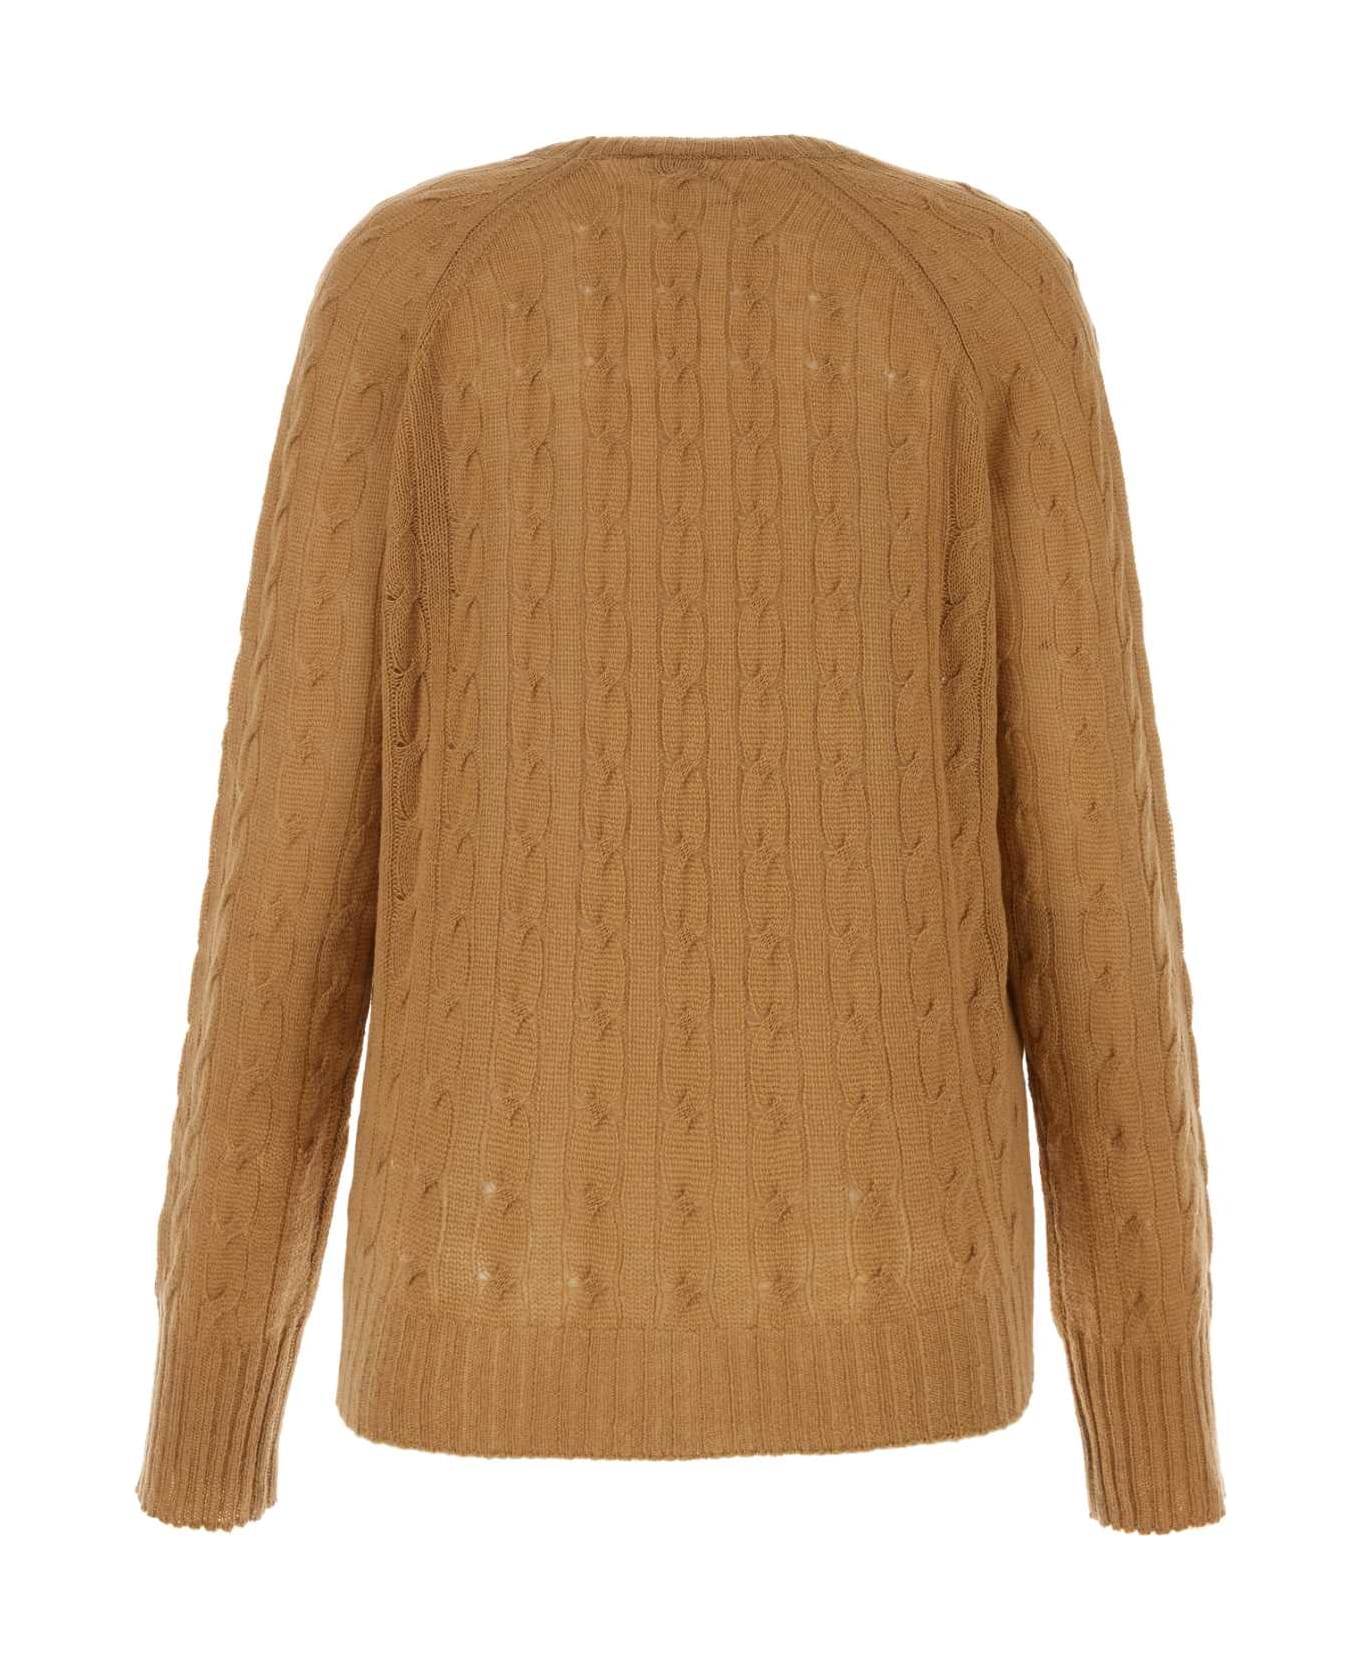 Etro Camel Cashmere Sweater - BEIGE